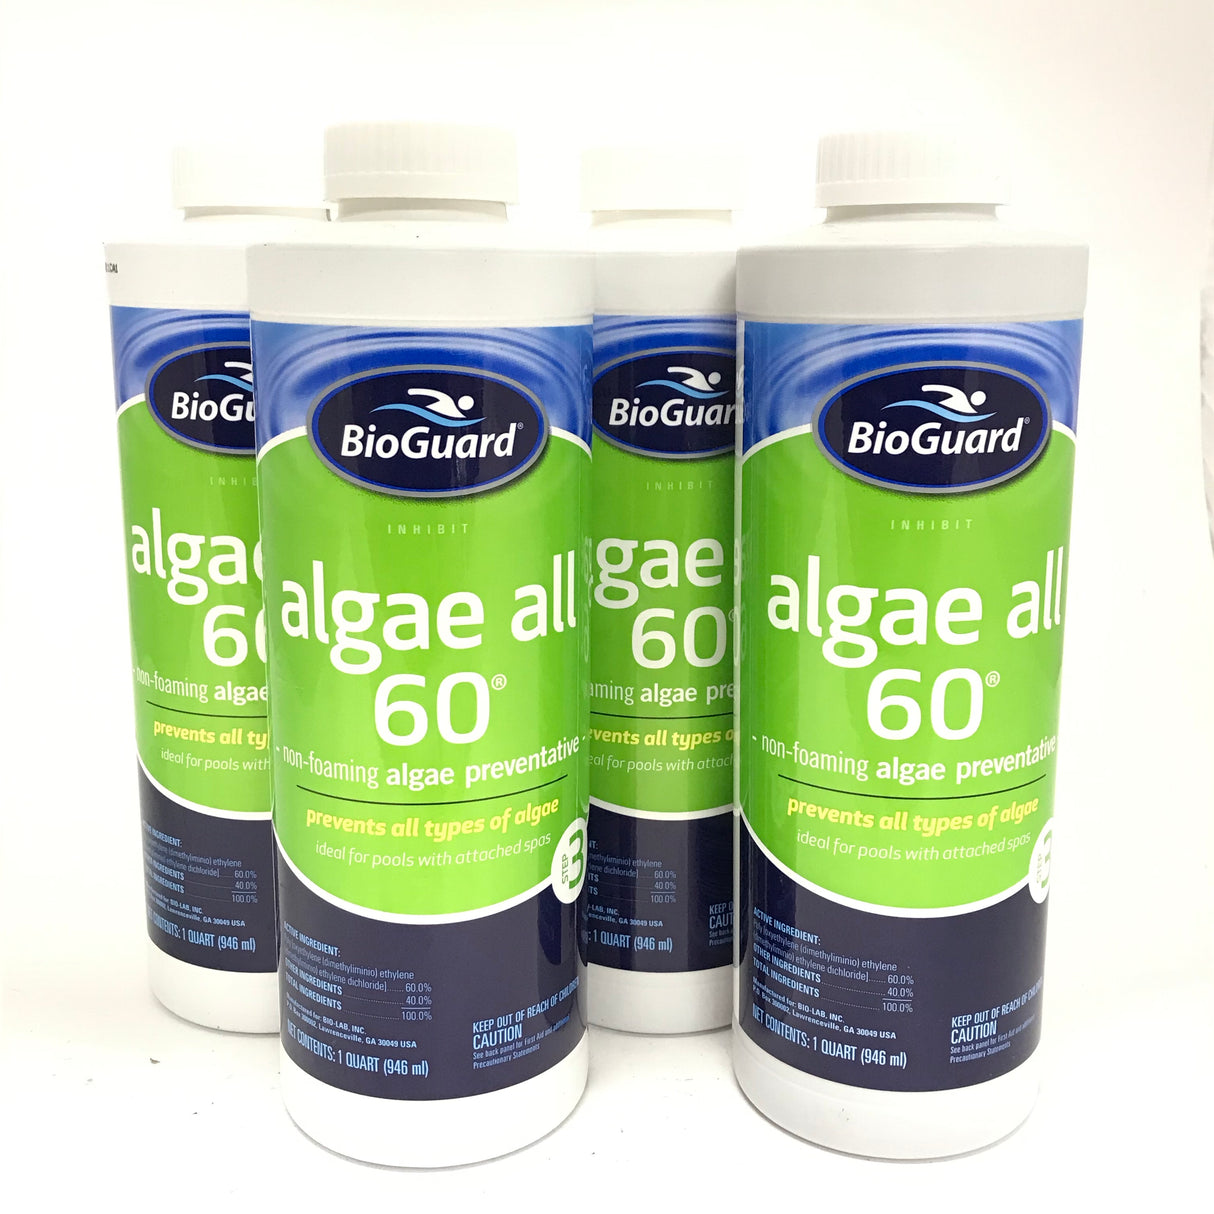 BioGuard-23060 Algae All 60-4 PACK - Non-Foaming Algae Preventative - Step 3 - 4 quarts